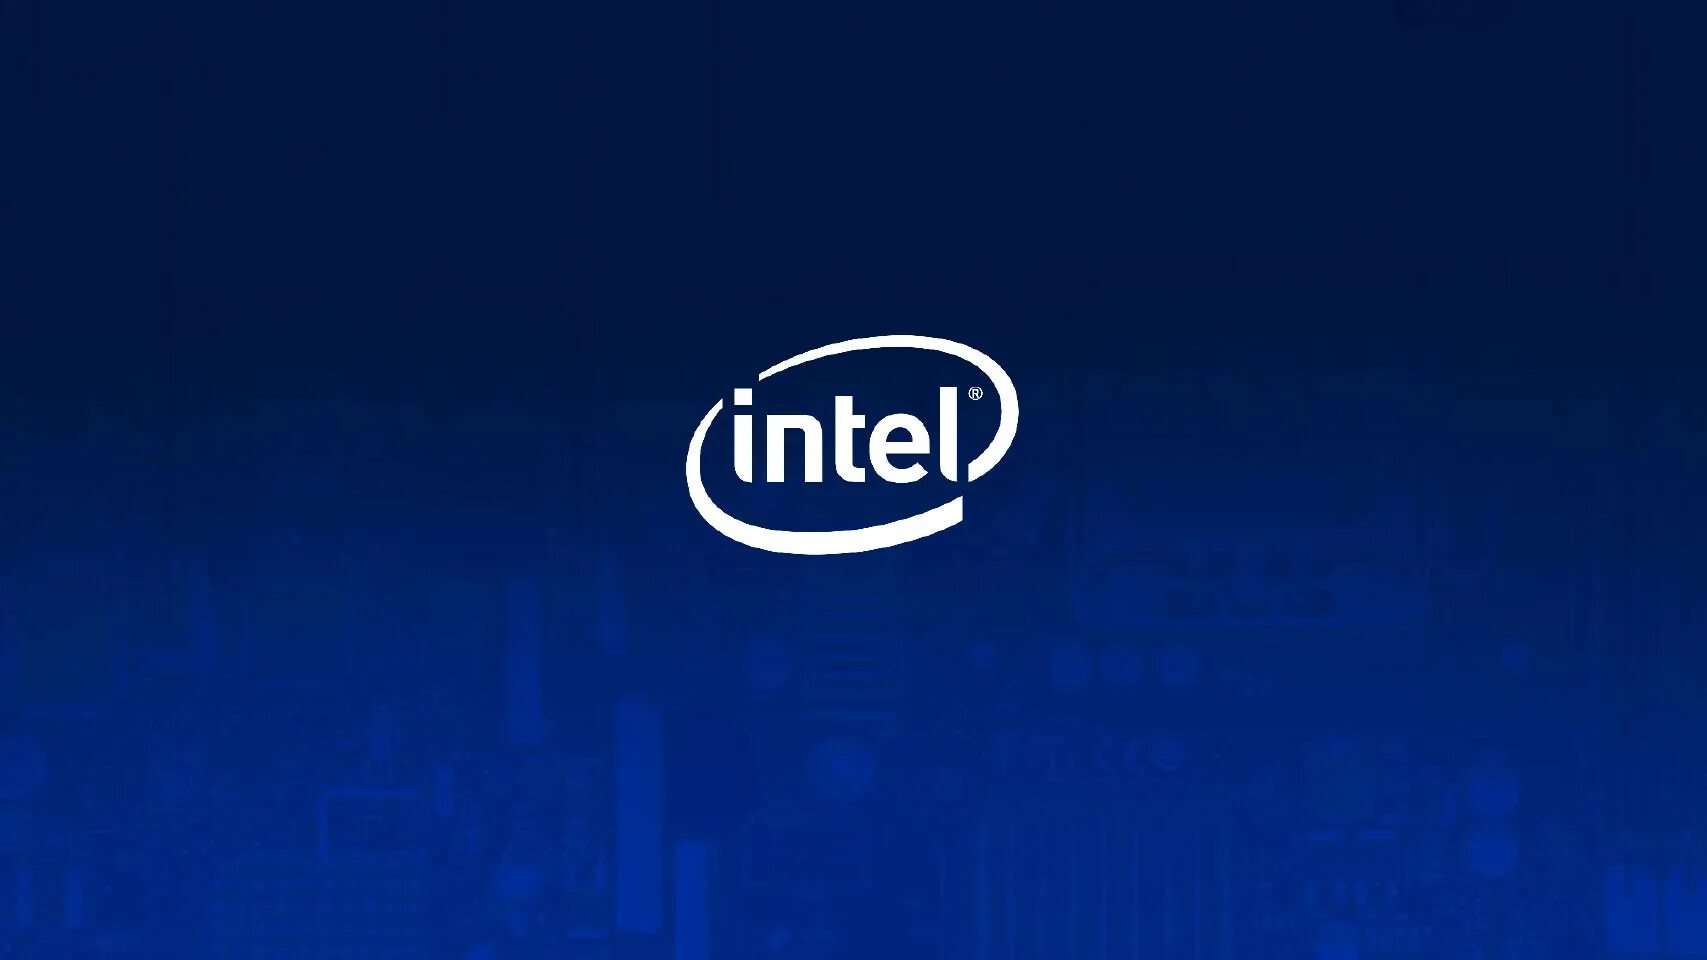 Обои Intel Core i5. Логотип Intel. Intel обложка. Слоган Интел. Intel content